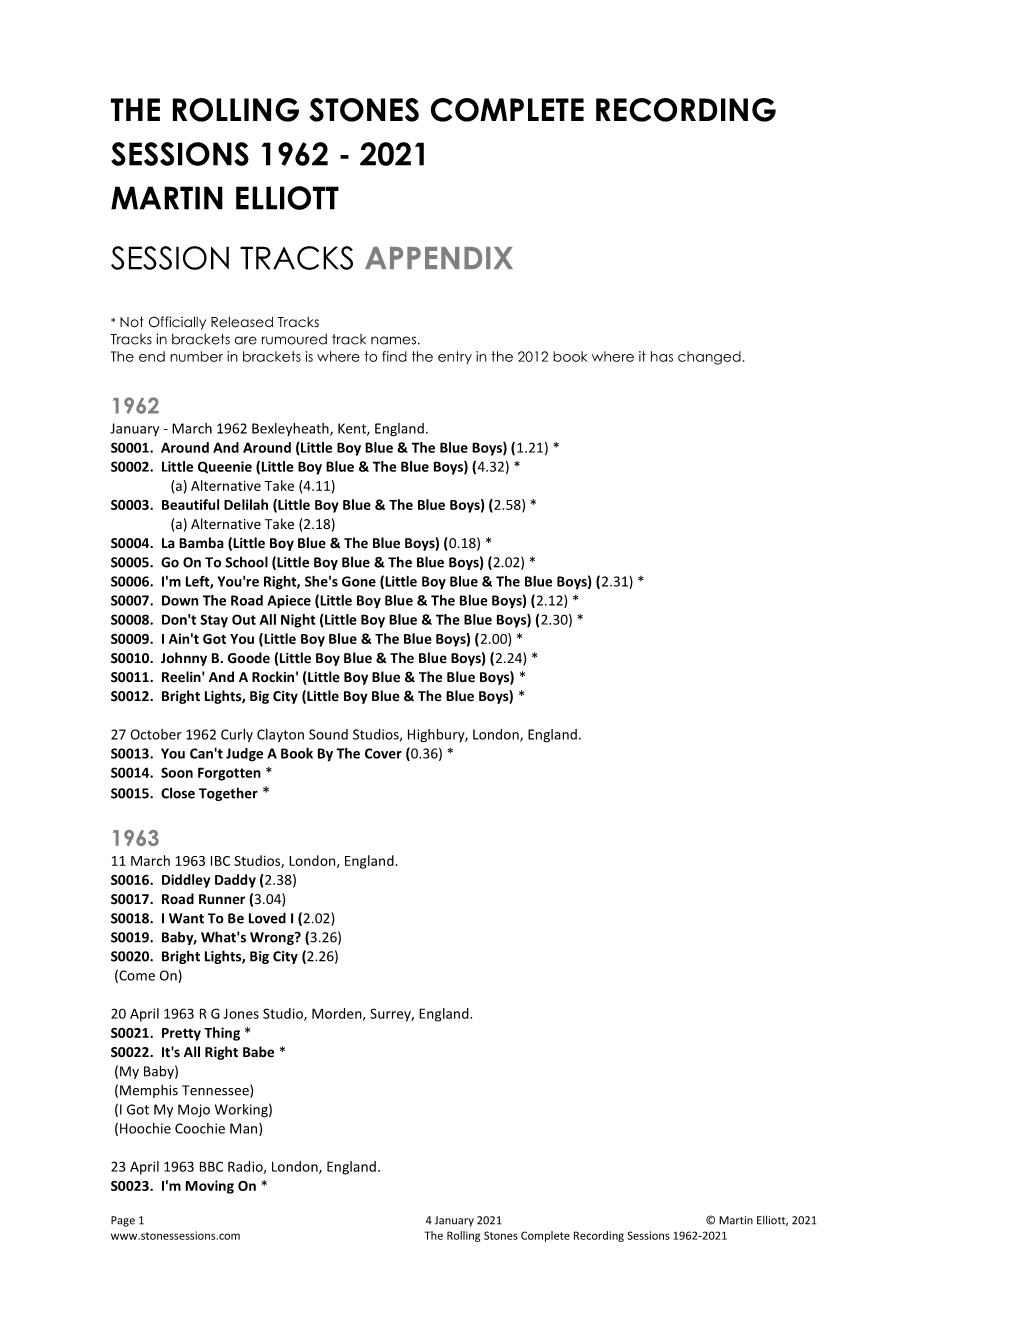 2021 Martin Elliott Session Tracks Appendix